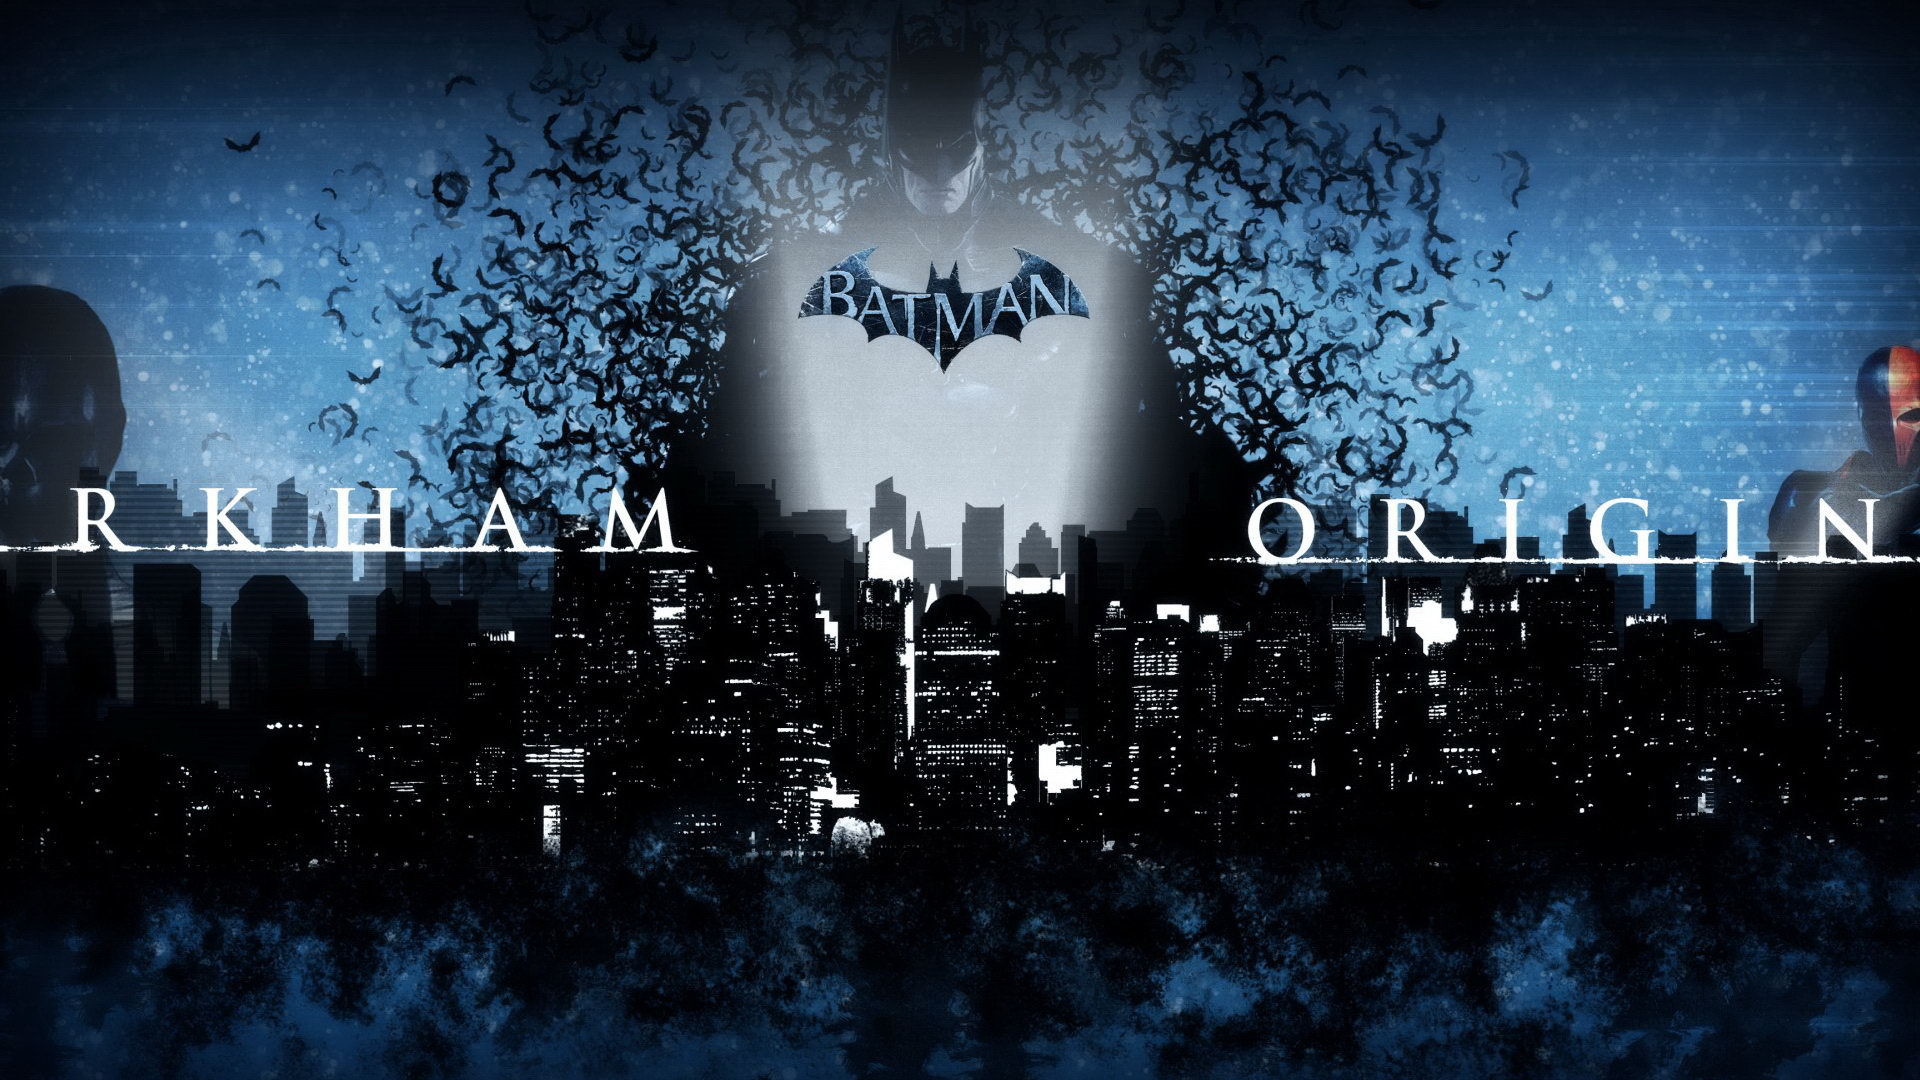 1920x1080 Batman: Arkham Origins screensaver hd wallpapers and images .